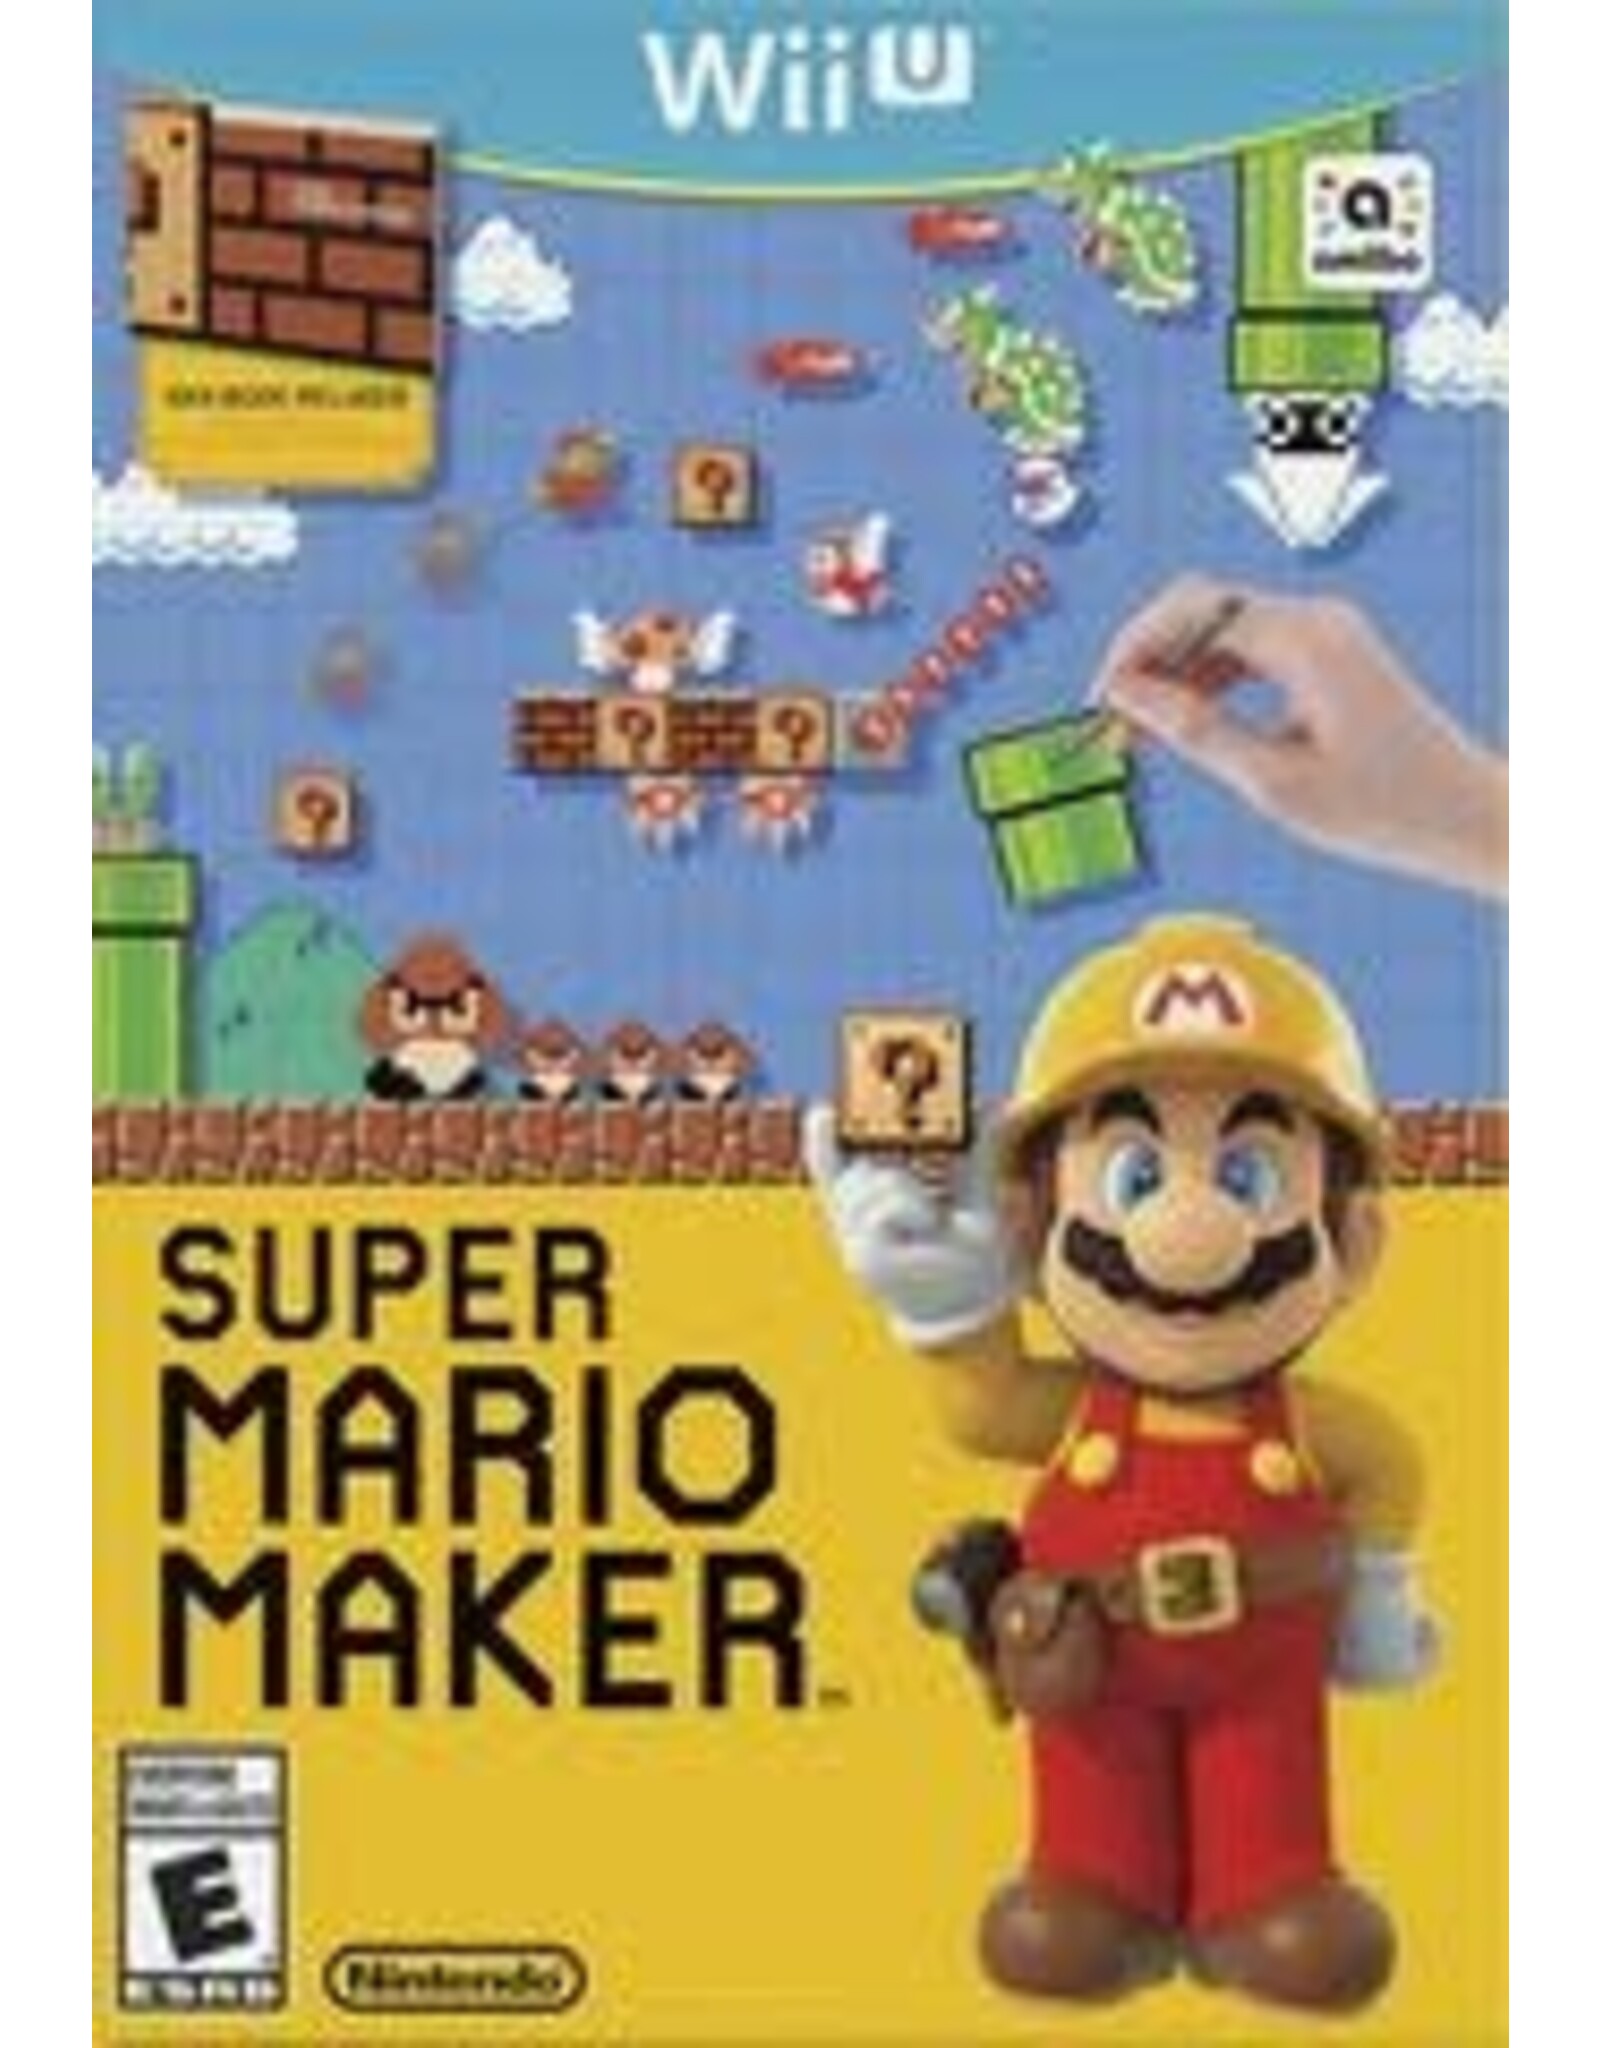 Wii U Super Mario Maker - Big Box (Used)